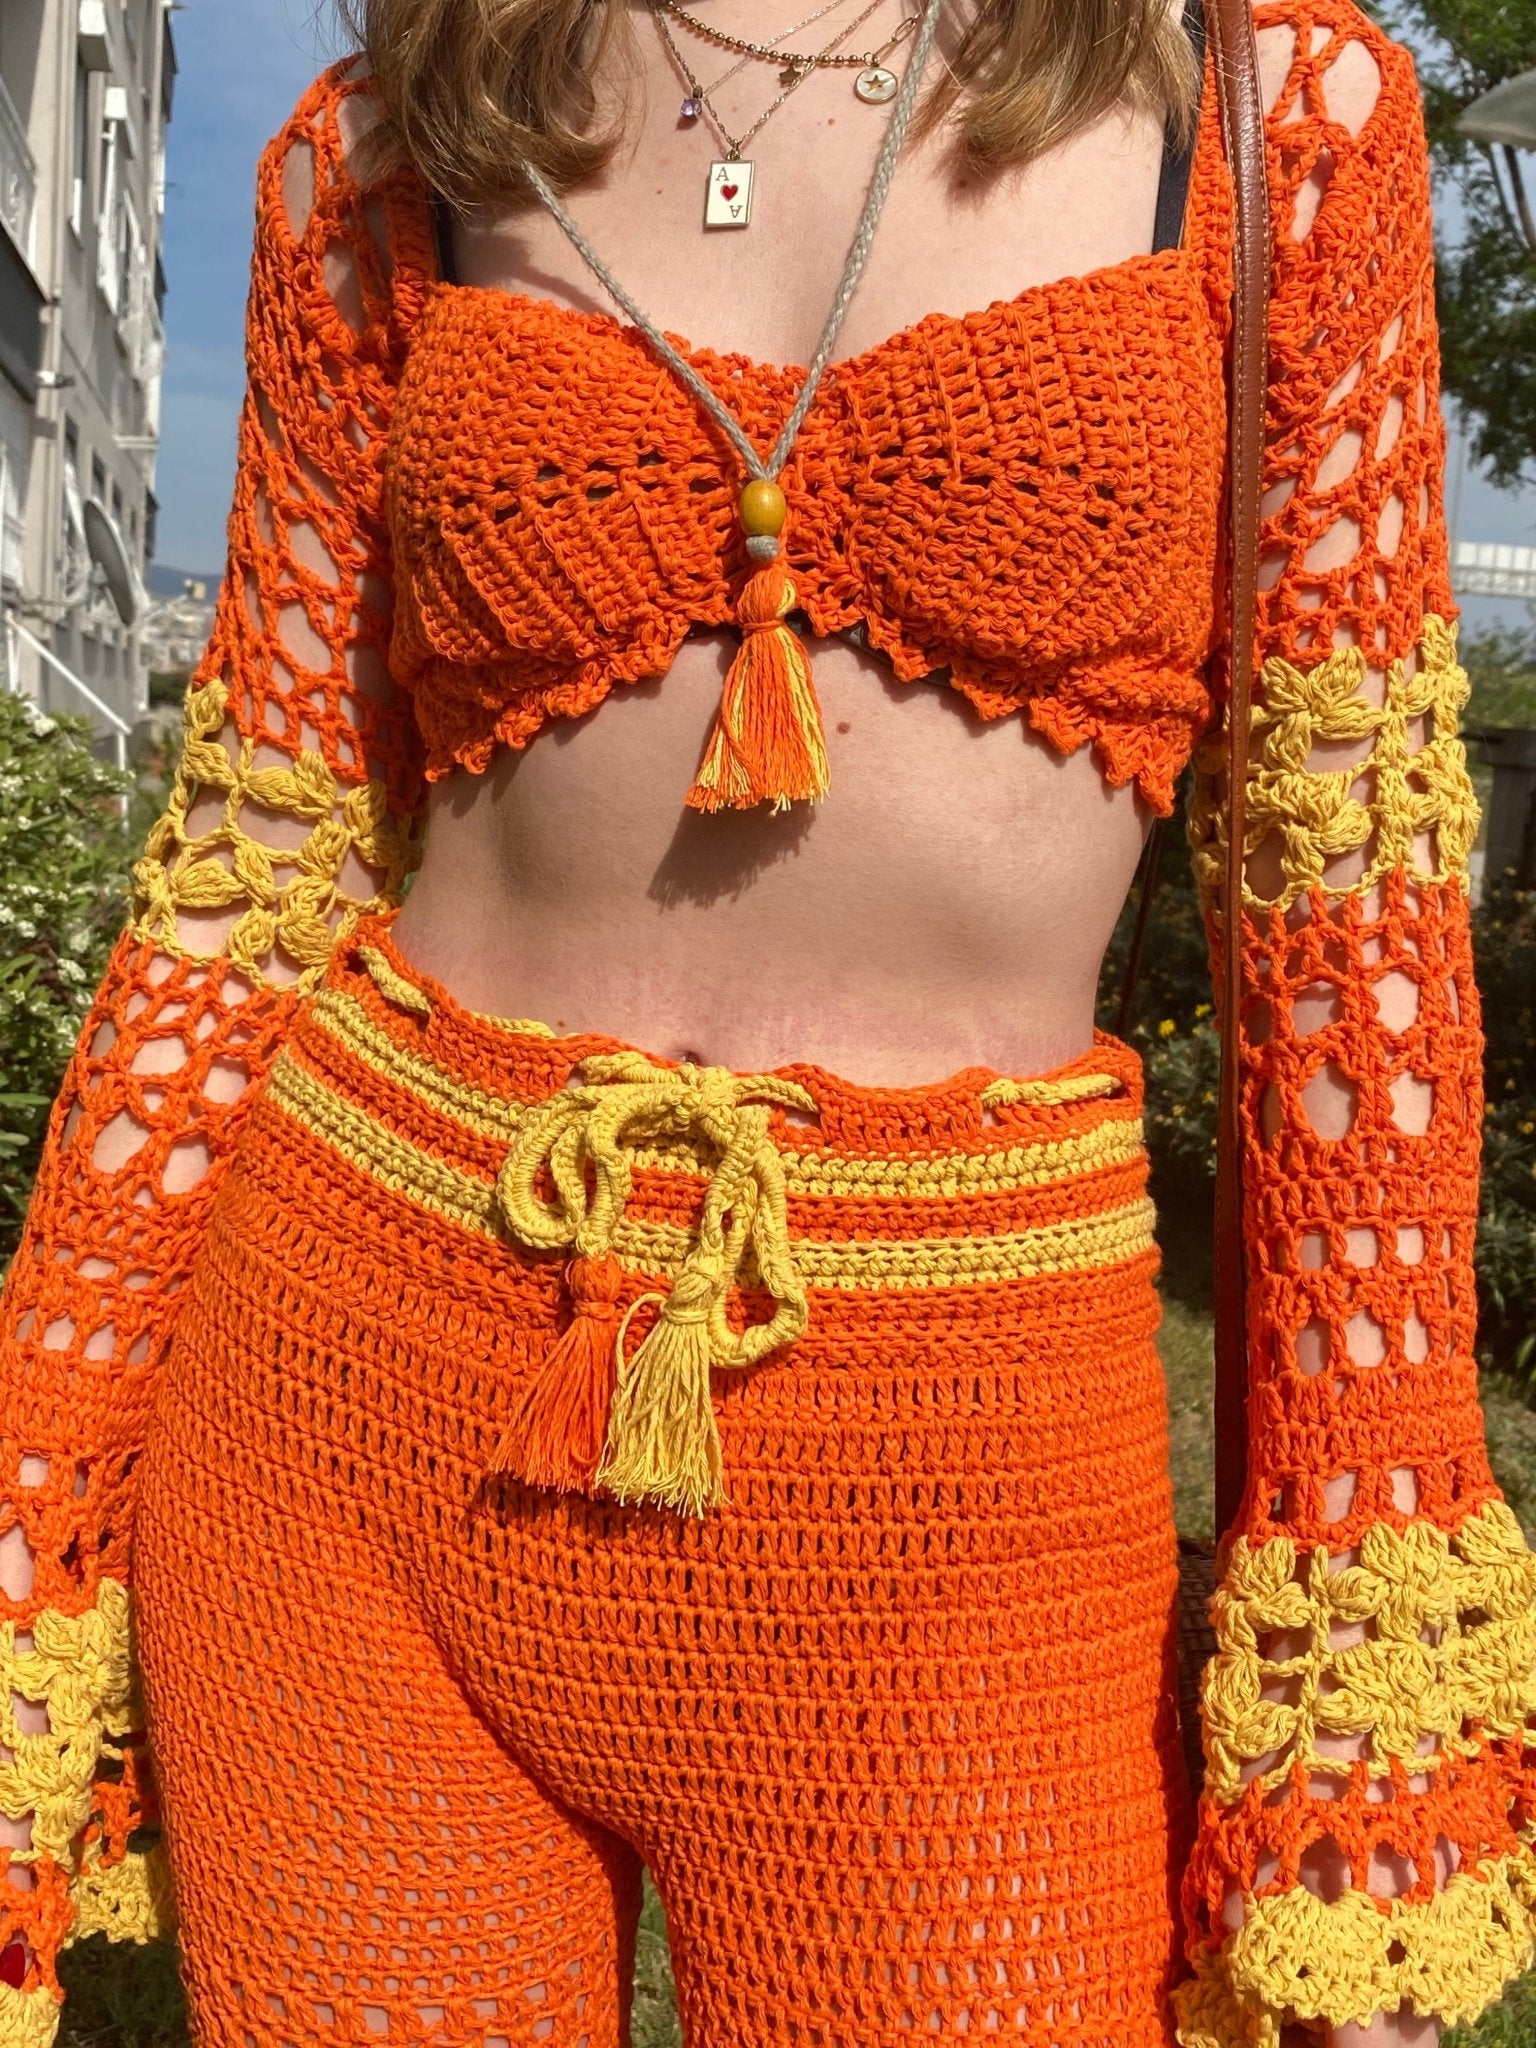 Crochet Coachella Outfit - Smyrna Collective